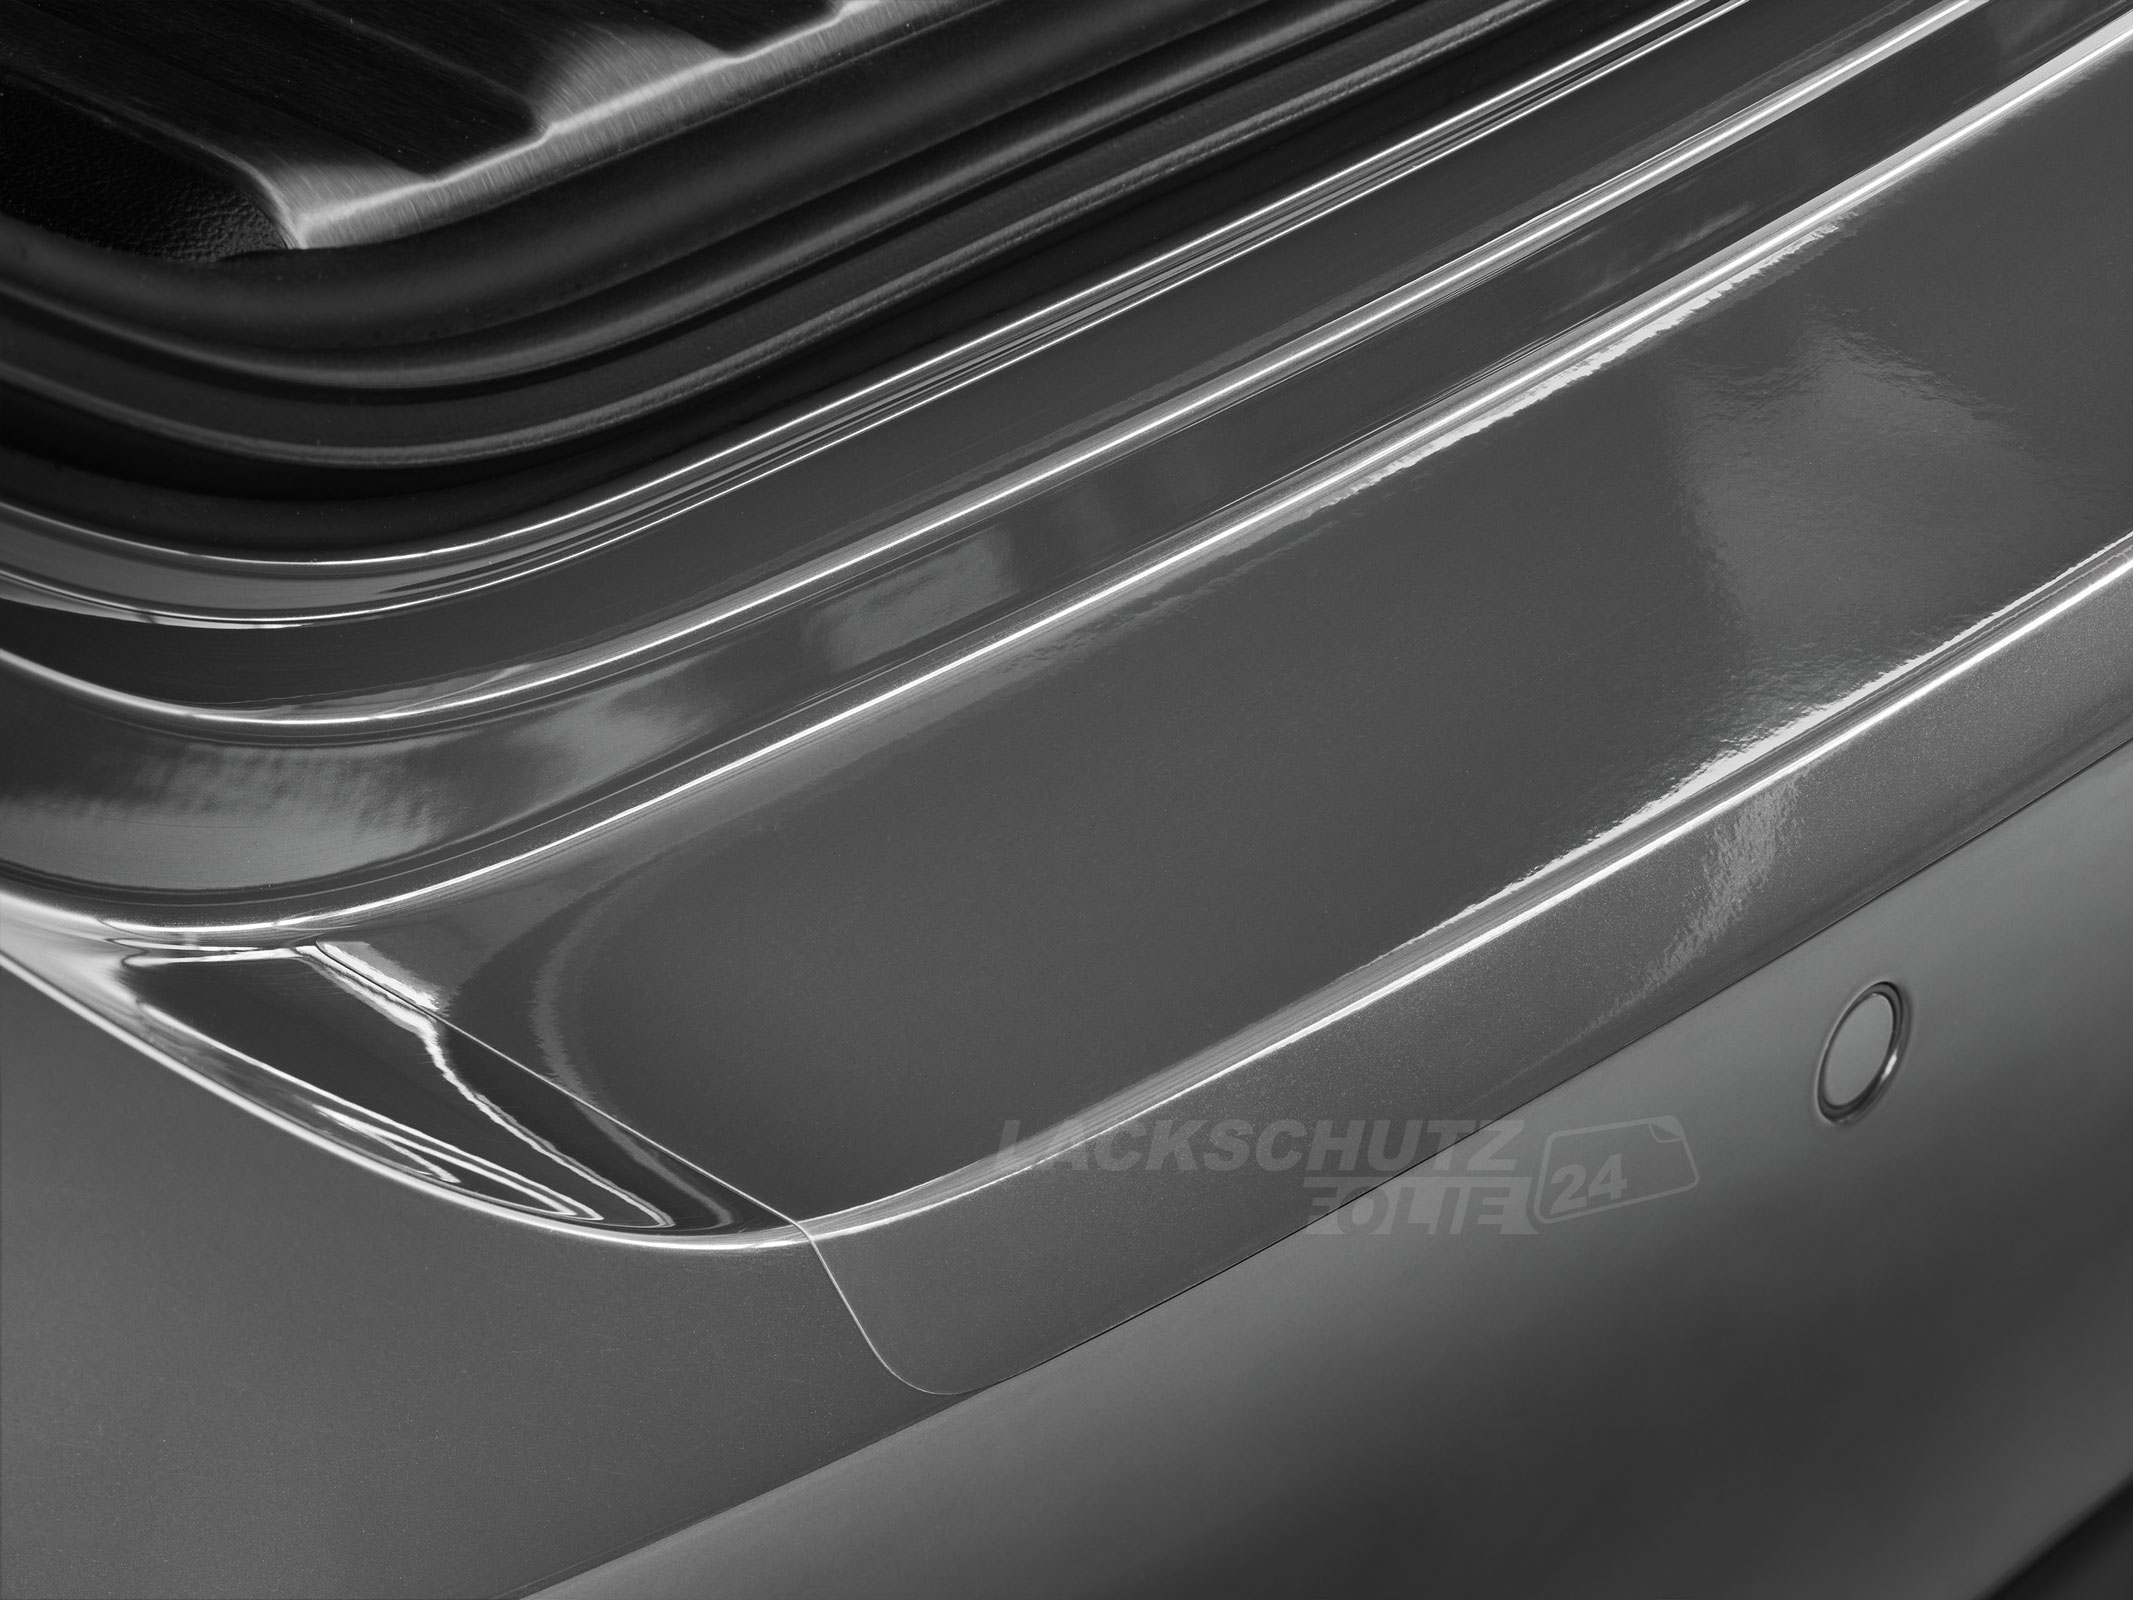 Ladekantenschutzfolie - Transparent Glatt Hochglänzend 150 µm stark für Audi A7 Sportback Typ C7, BJ 07/2010-02/2018